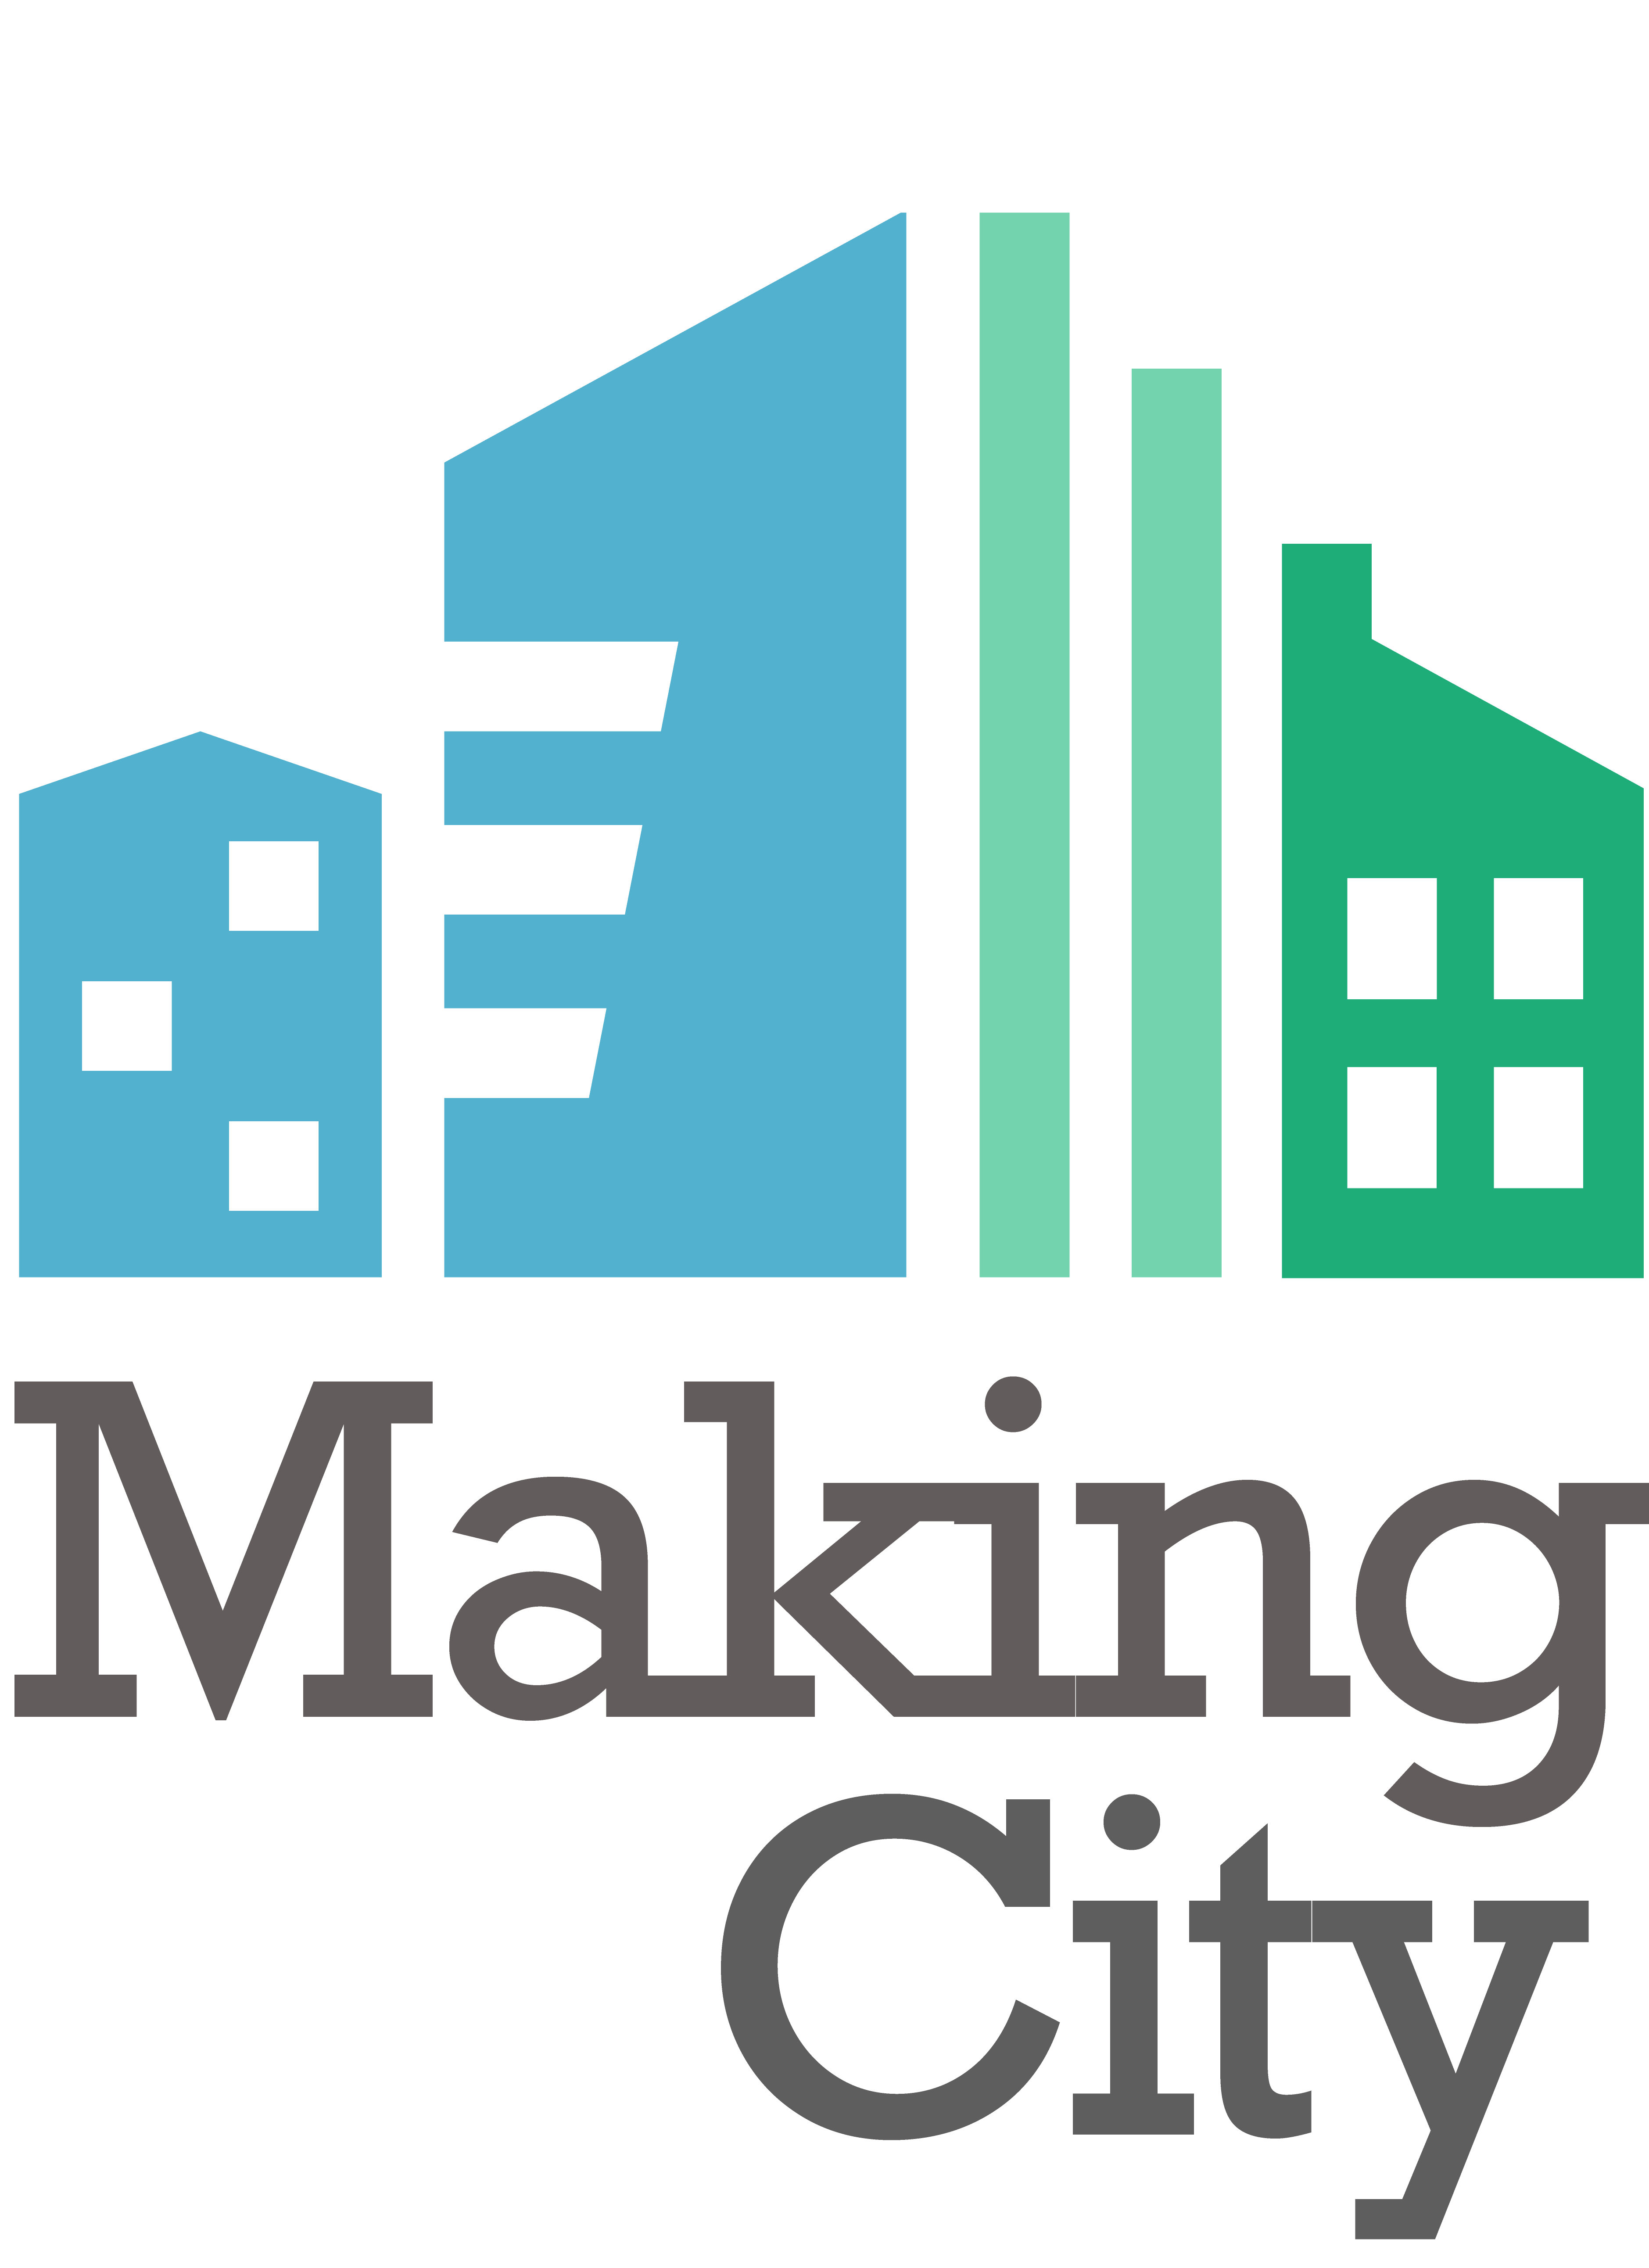 Making city hankkeen logo